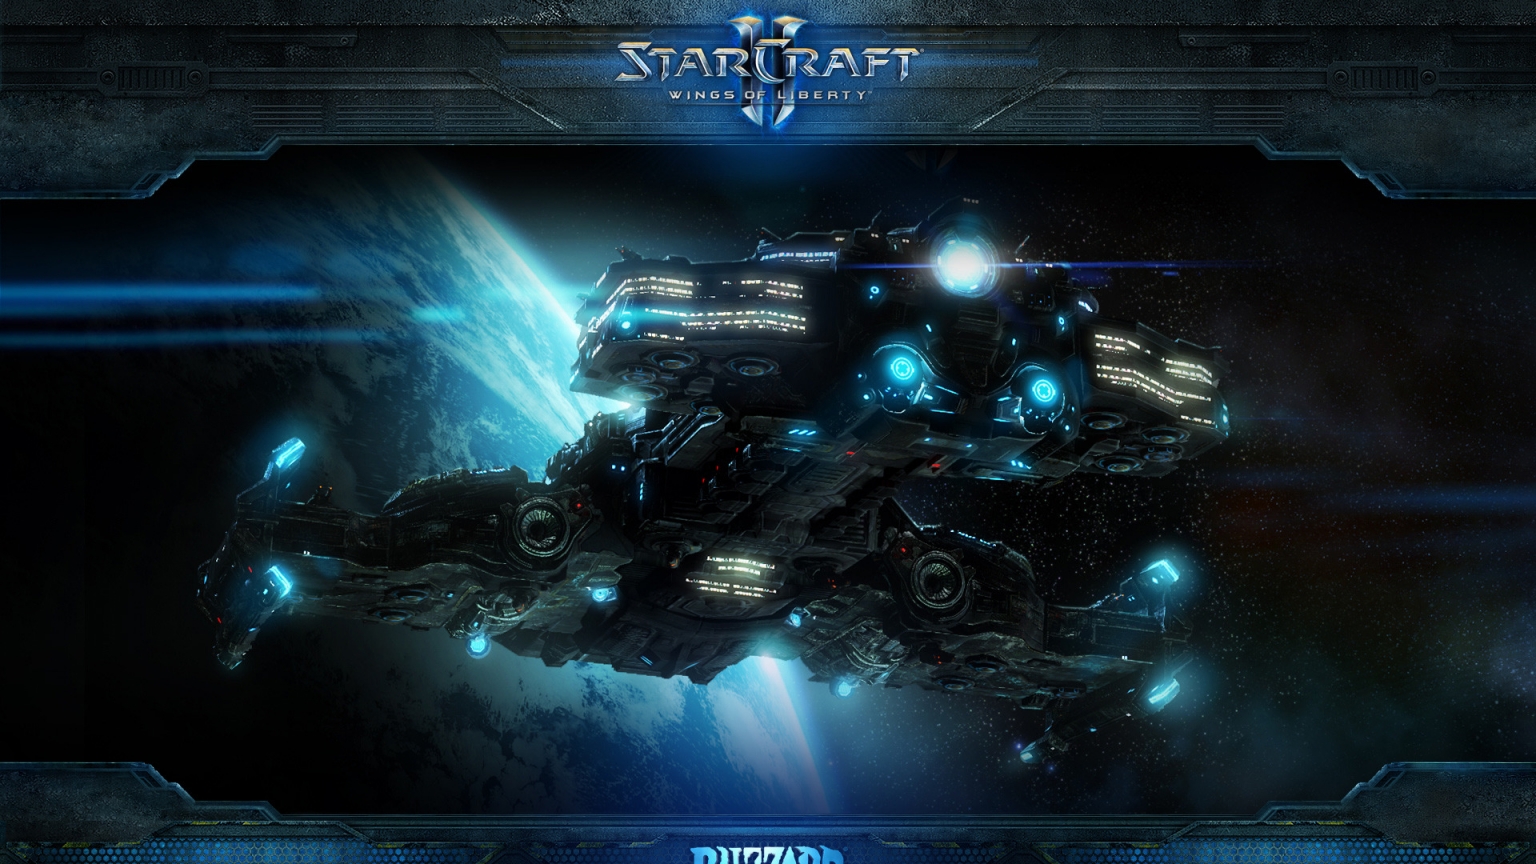 Starcraft 2 Ship for 1536 x 864 HDTV resolution